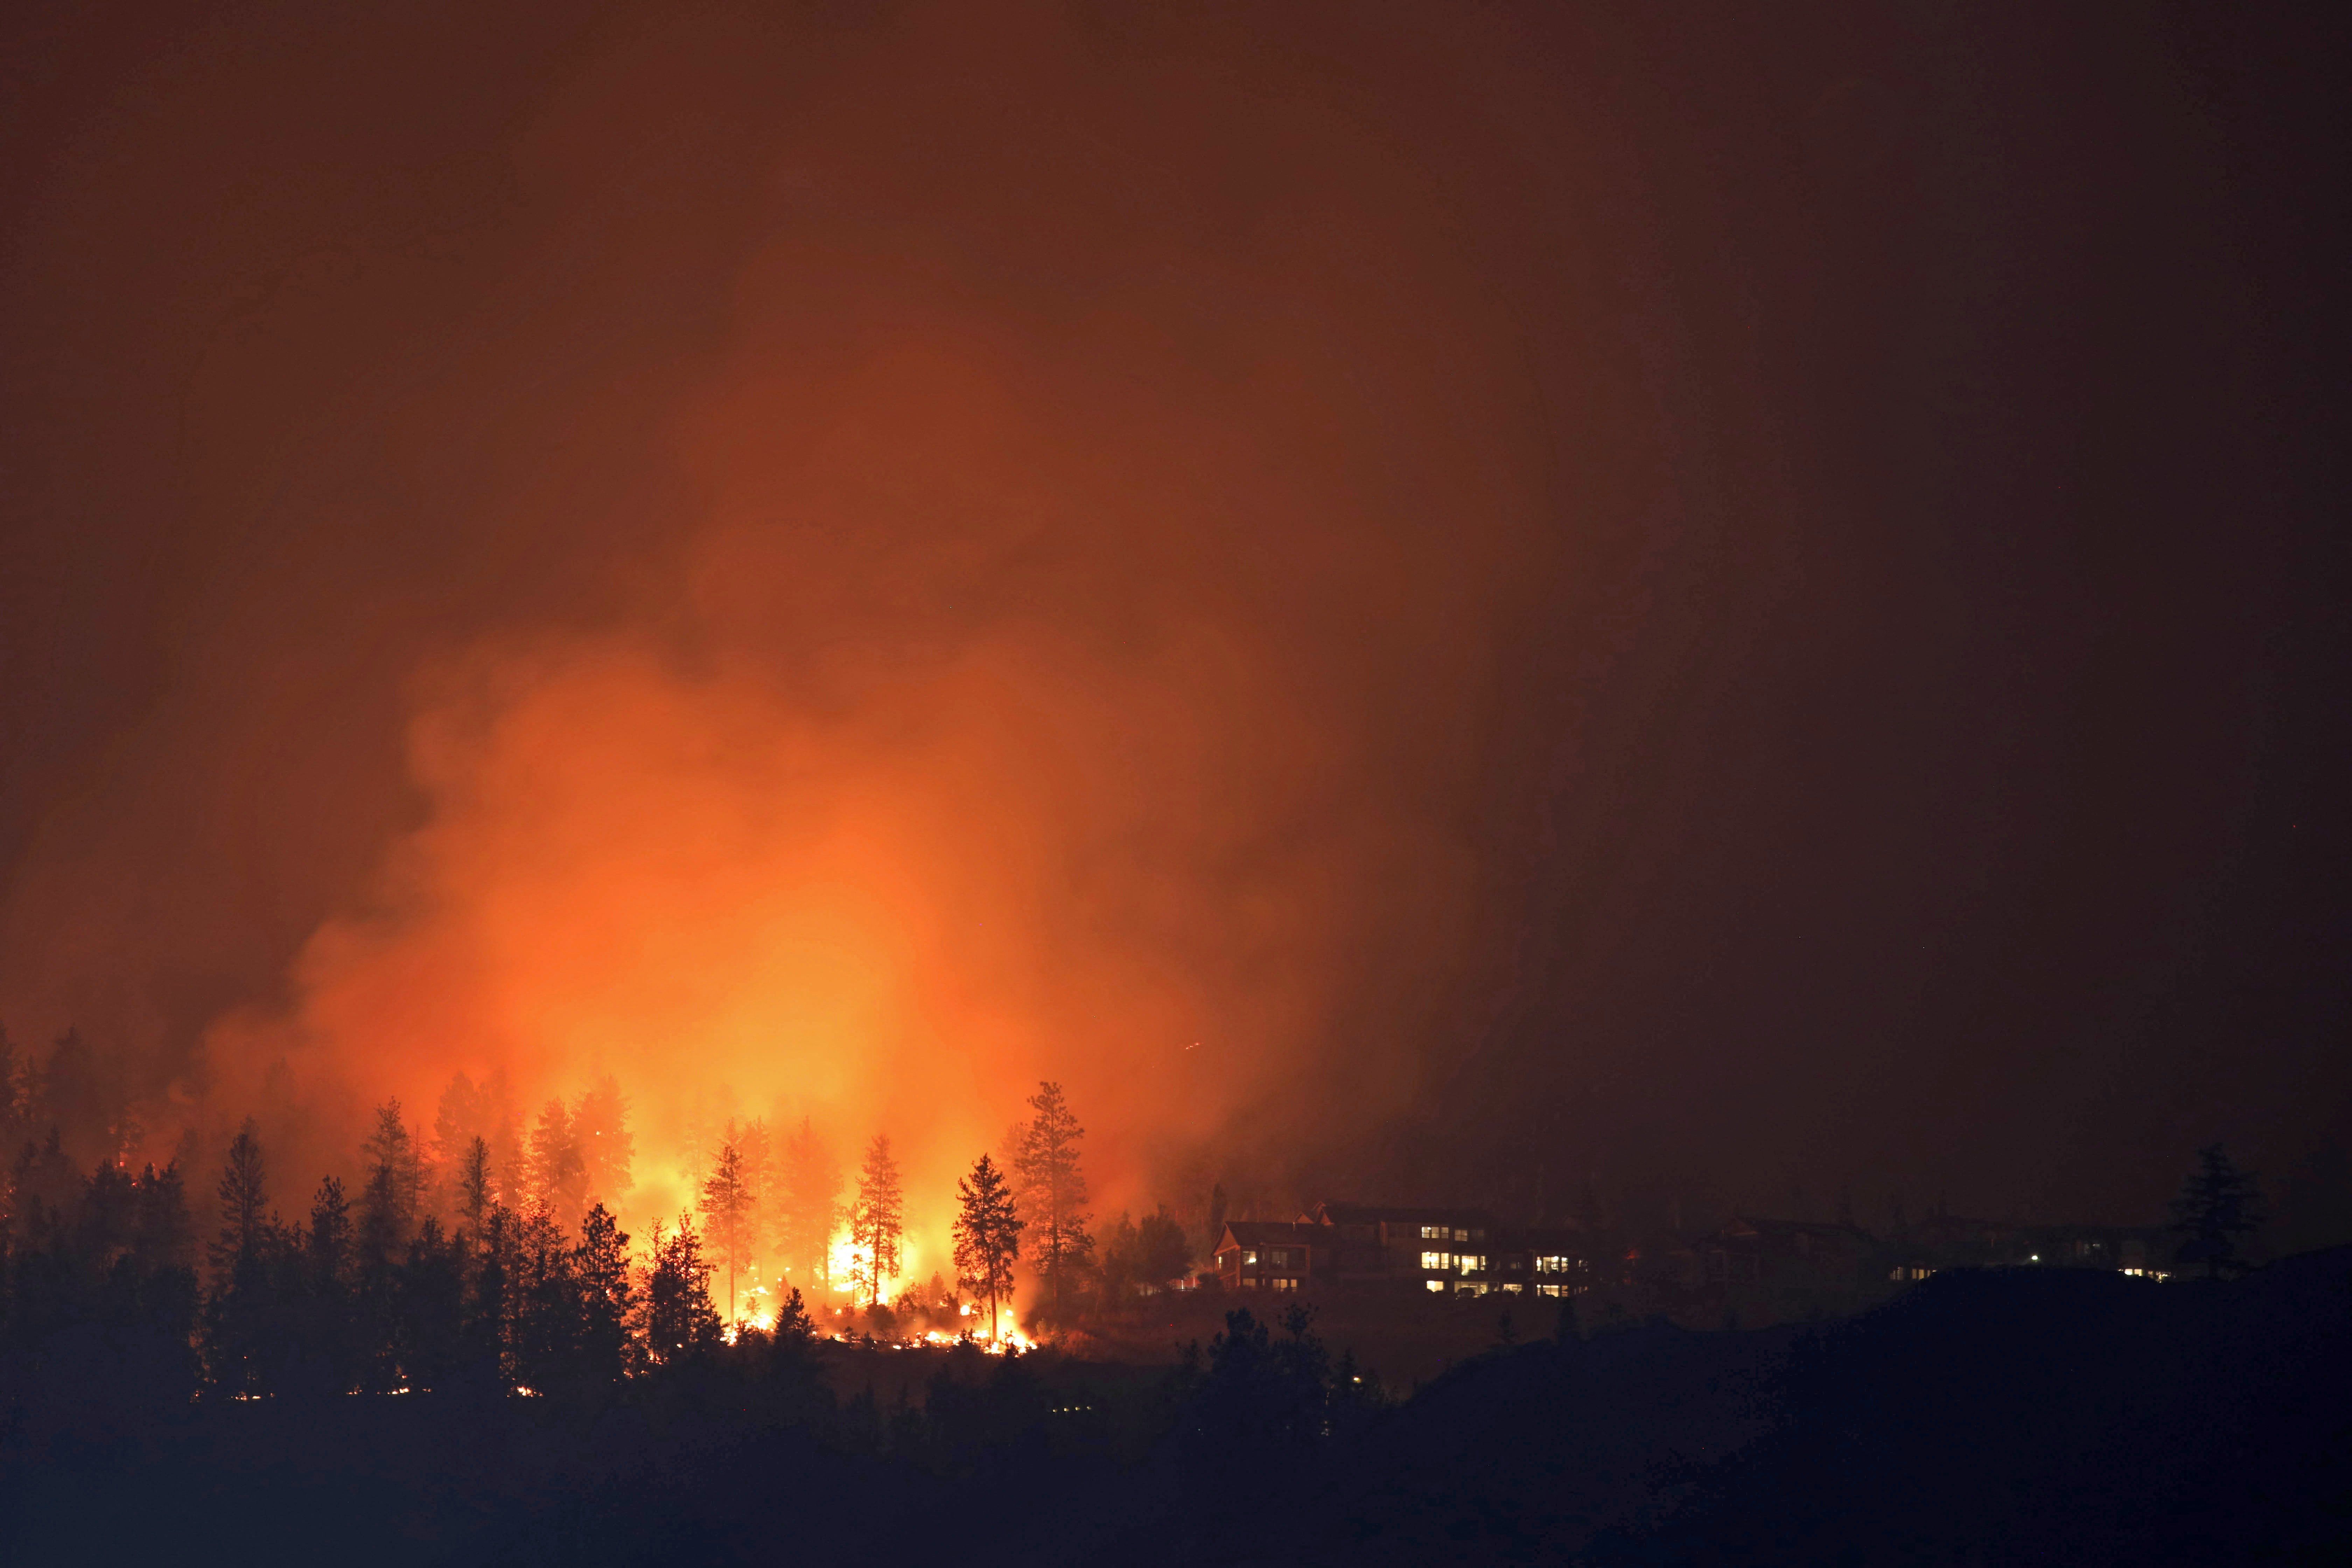 The McDougall Creek wildfire burns next to houses in the Okanagan community of West Kelowna, British Columbia, Canada.